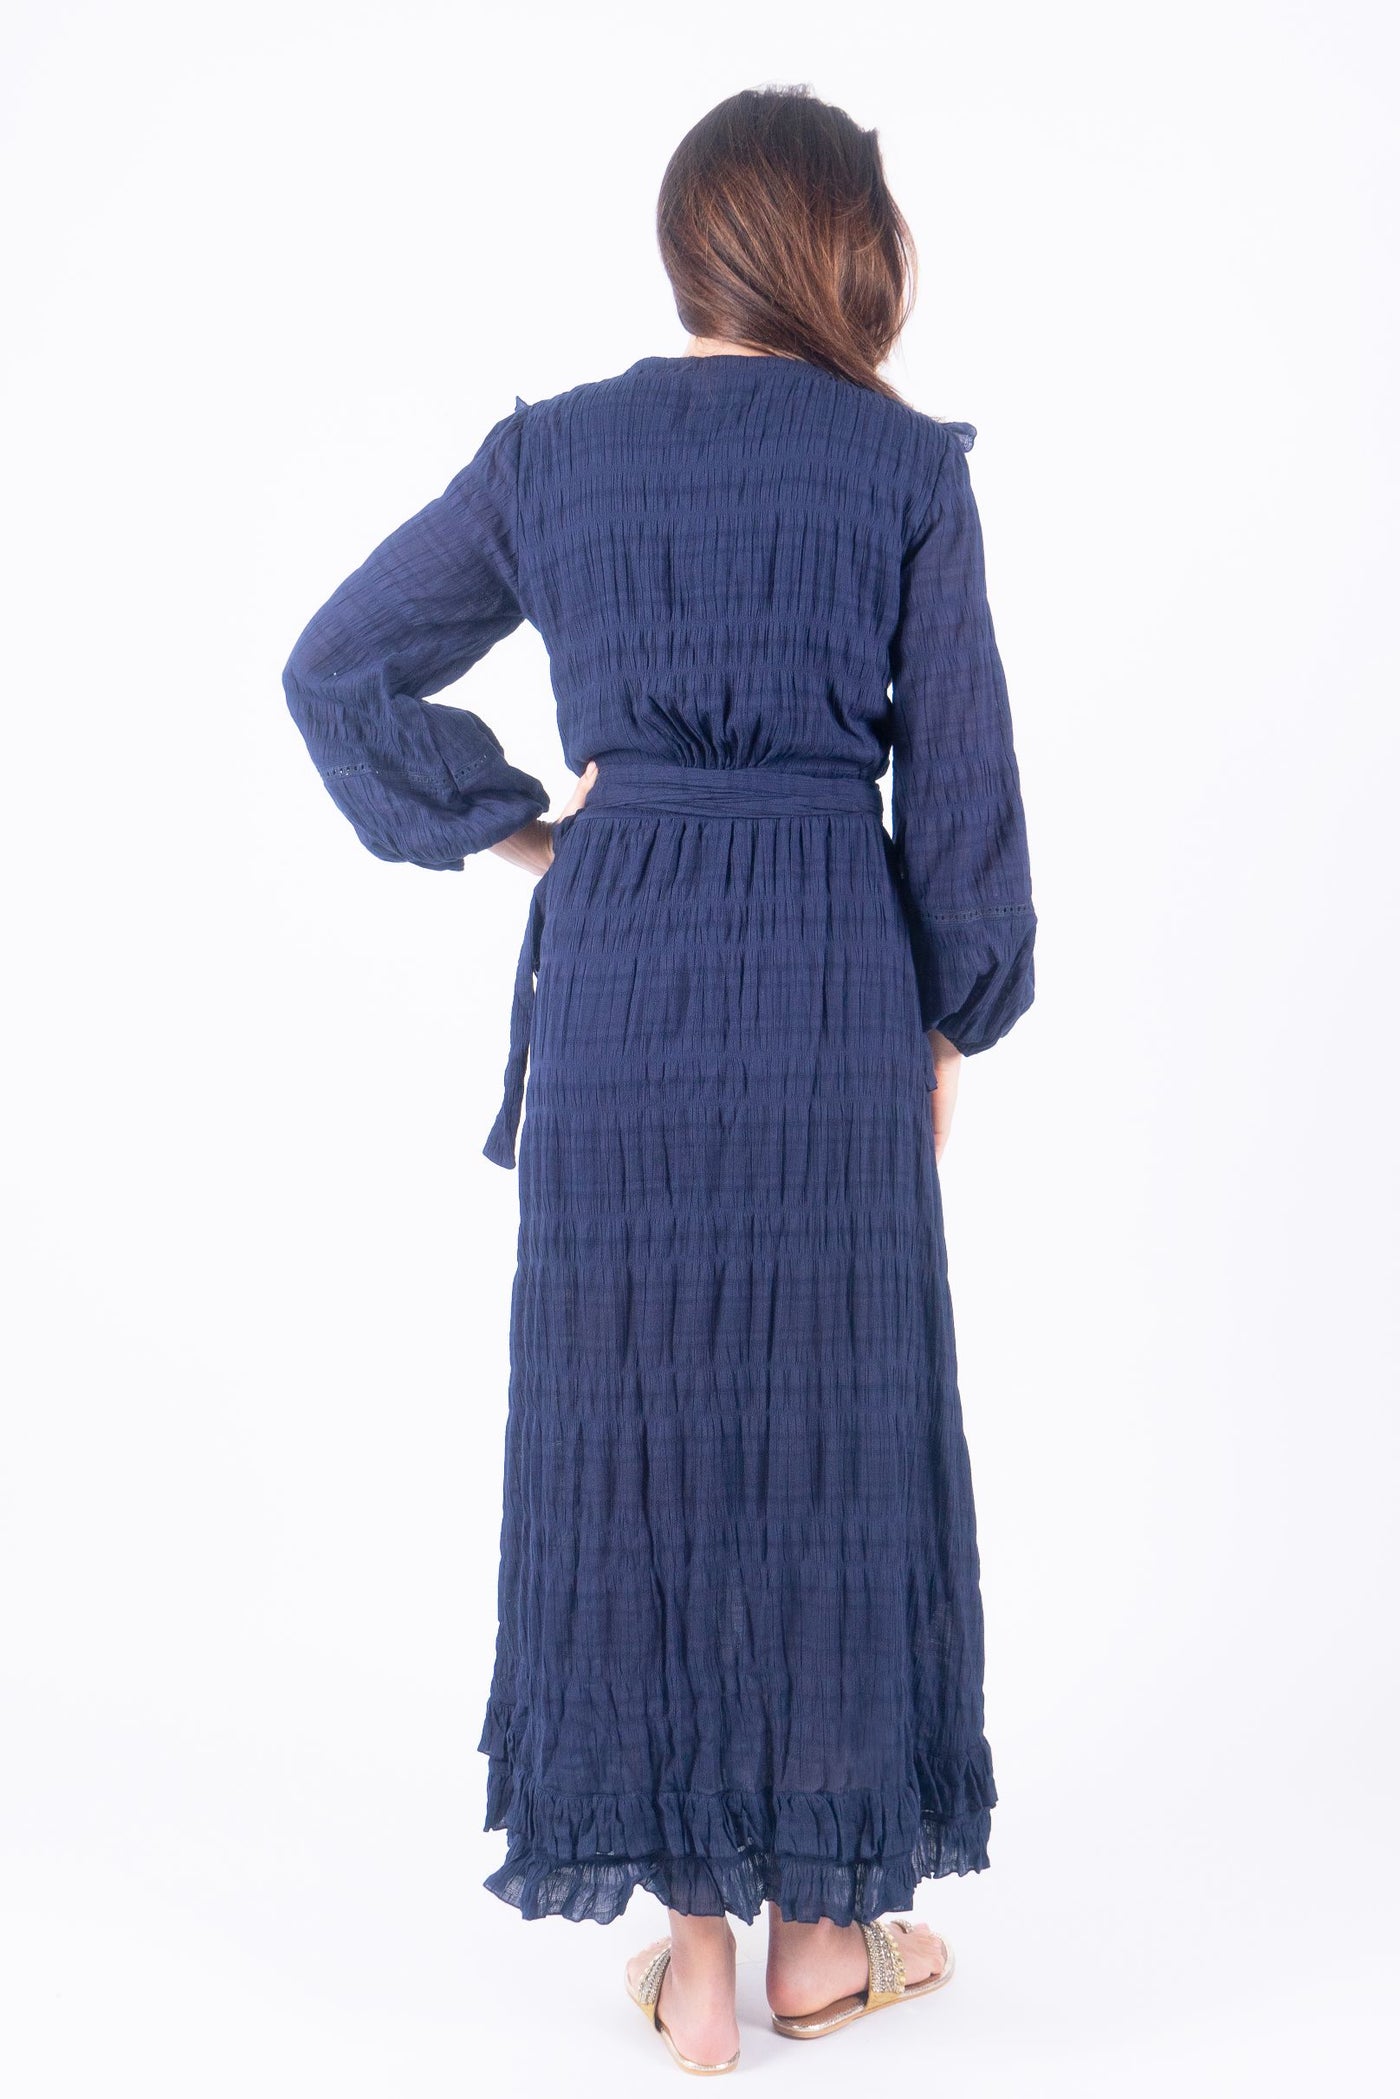 Madame Dress (Long) by KonaCoco